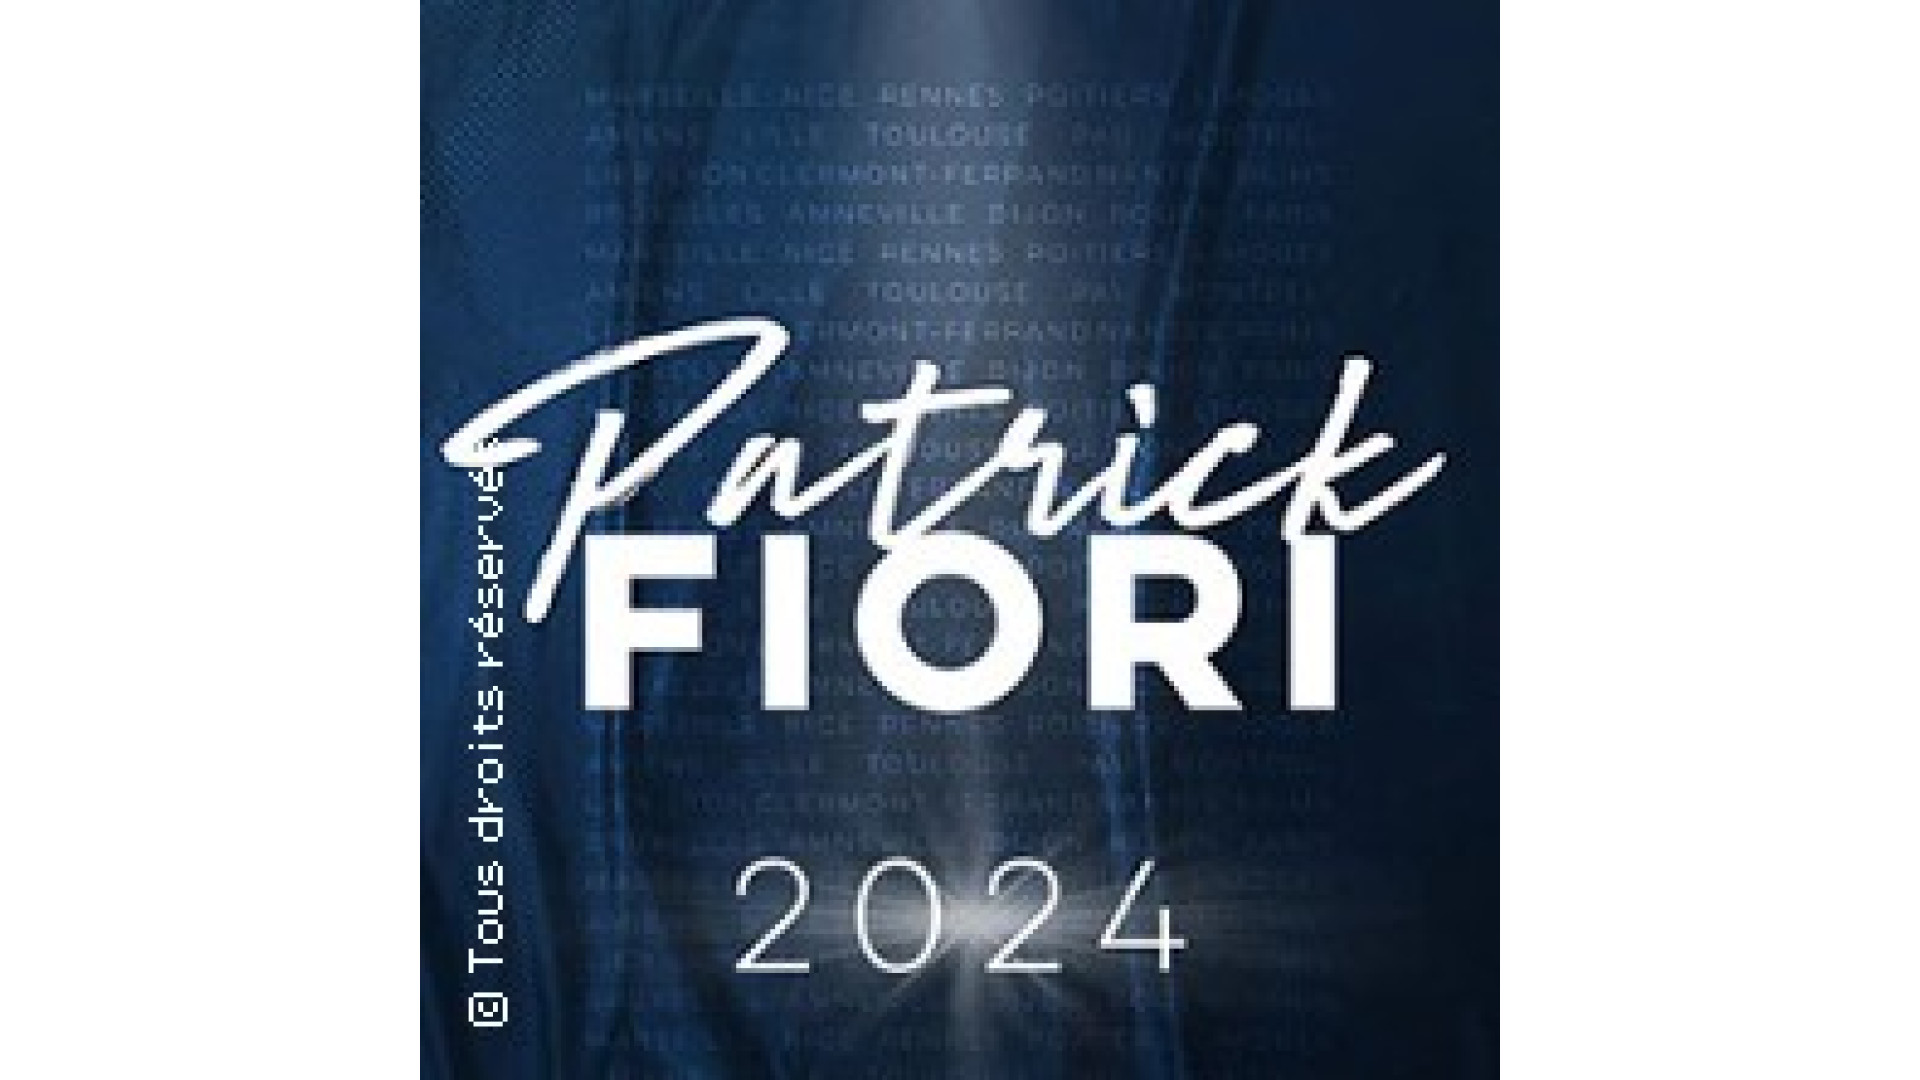 Concert Patrick Fiori à Toulon